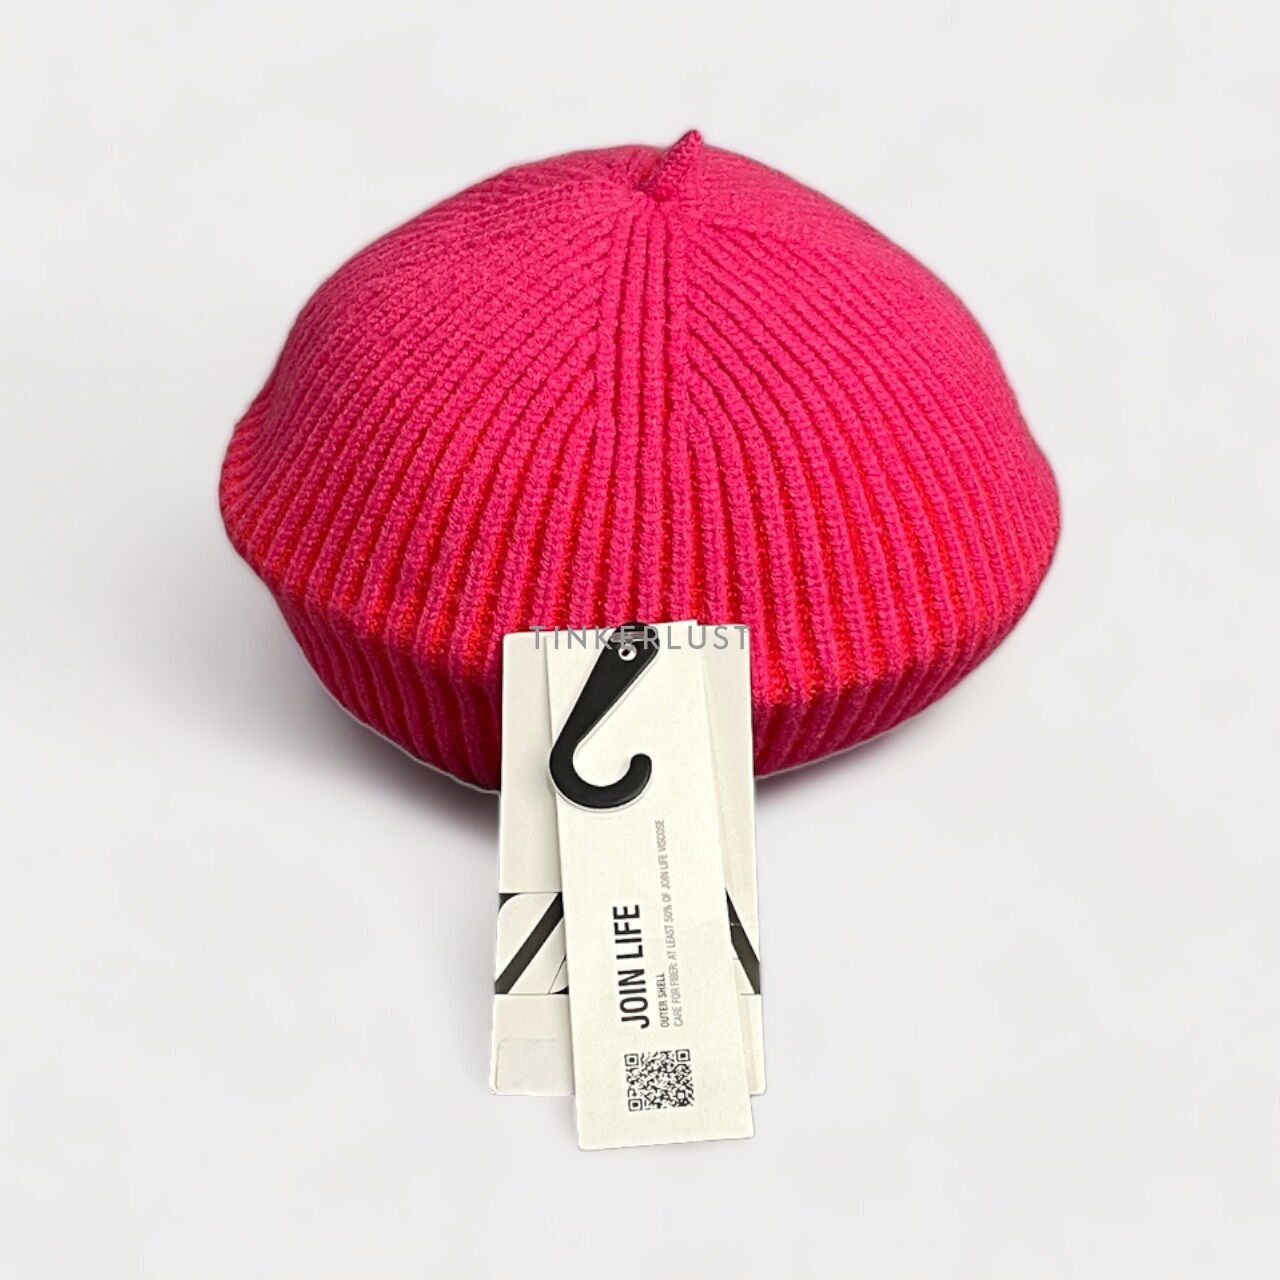 Zara Pink & Red Hats